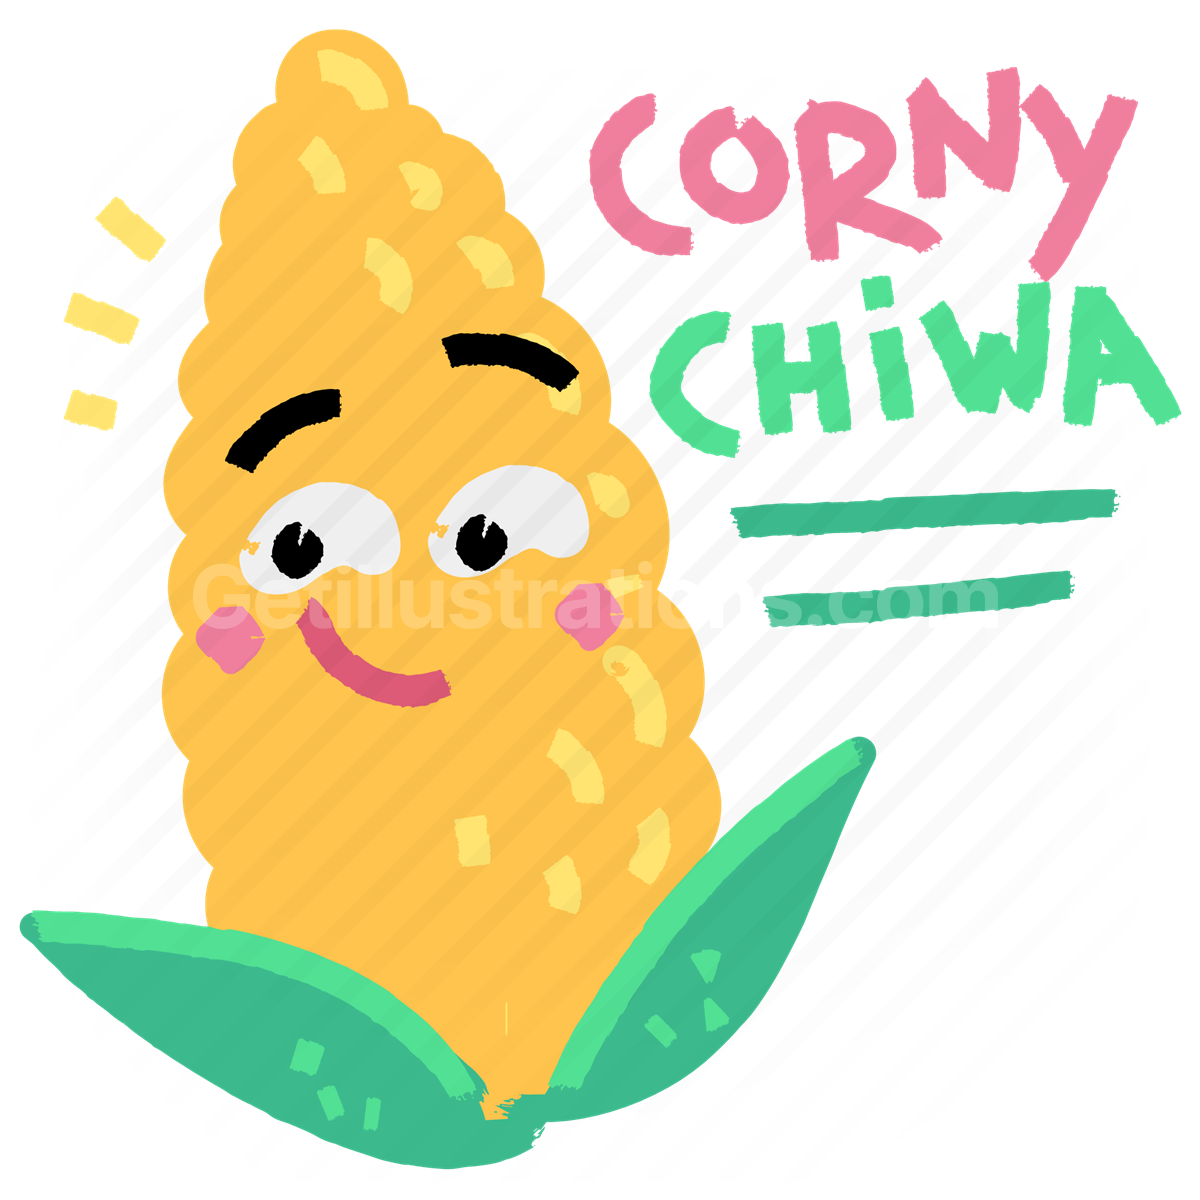 corny chiwa, corn, organic, greeting, sticker, character